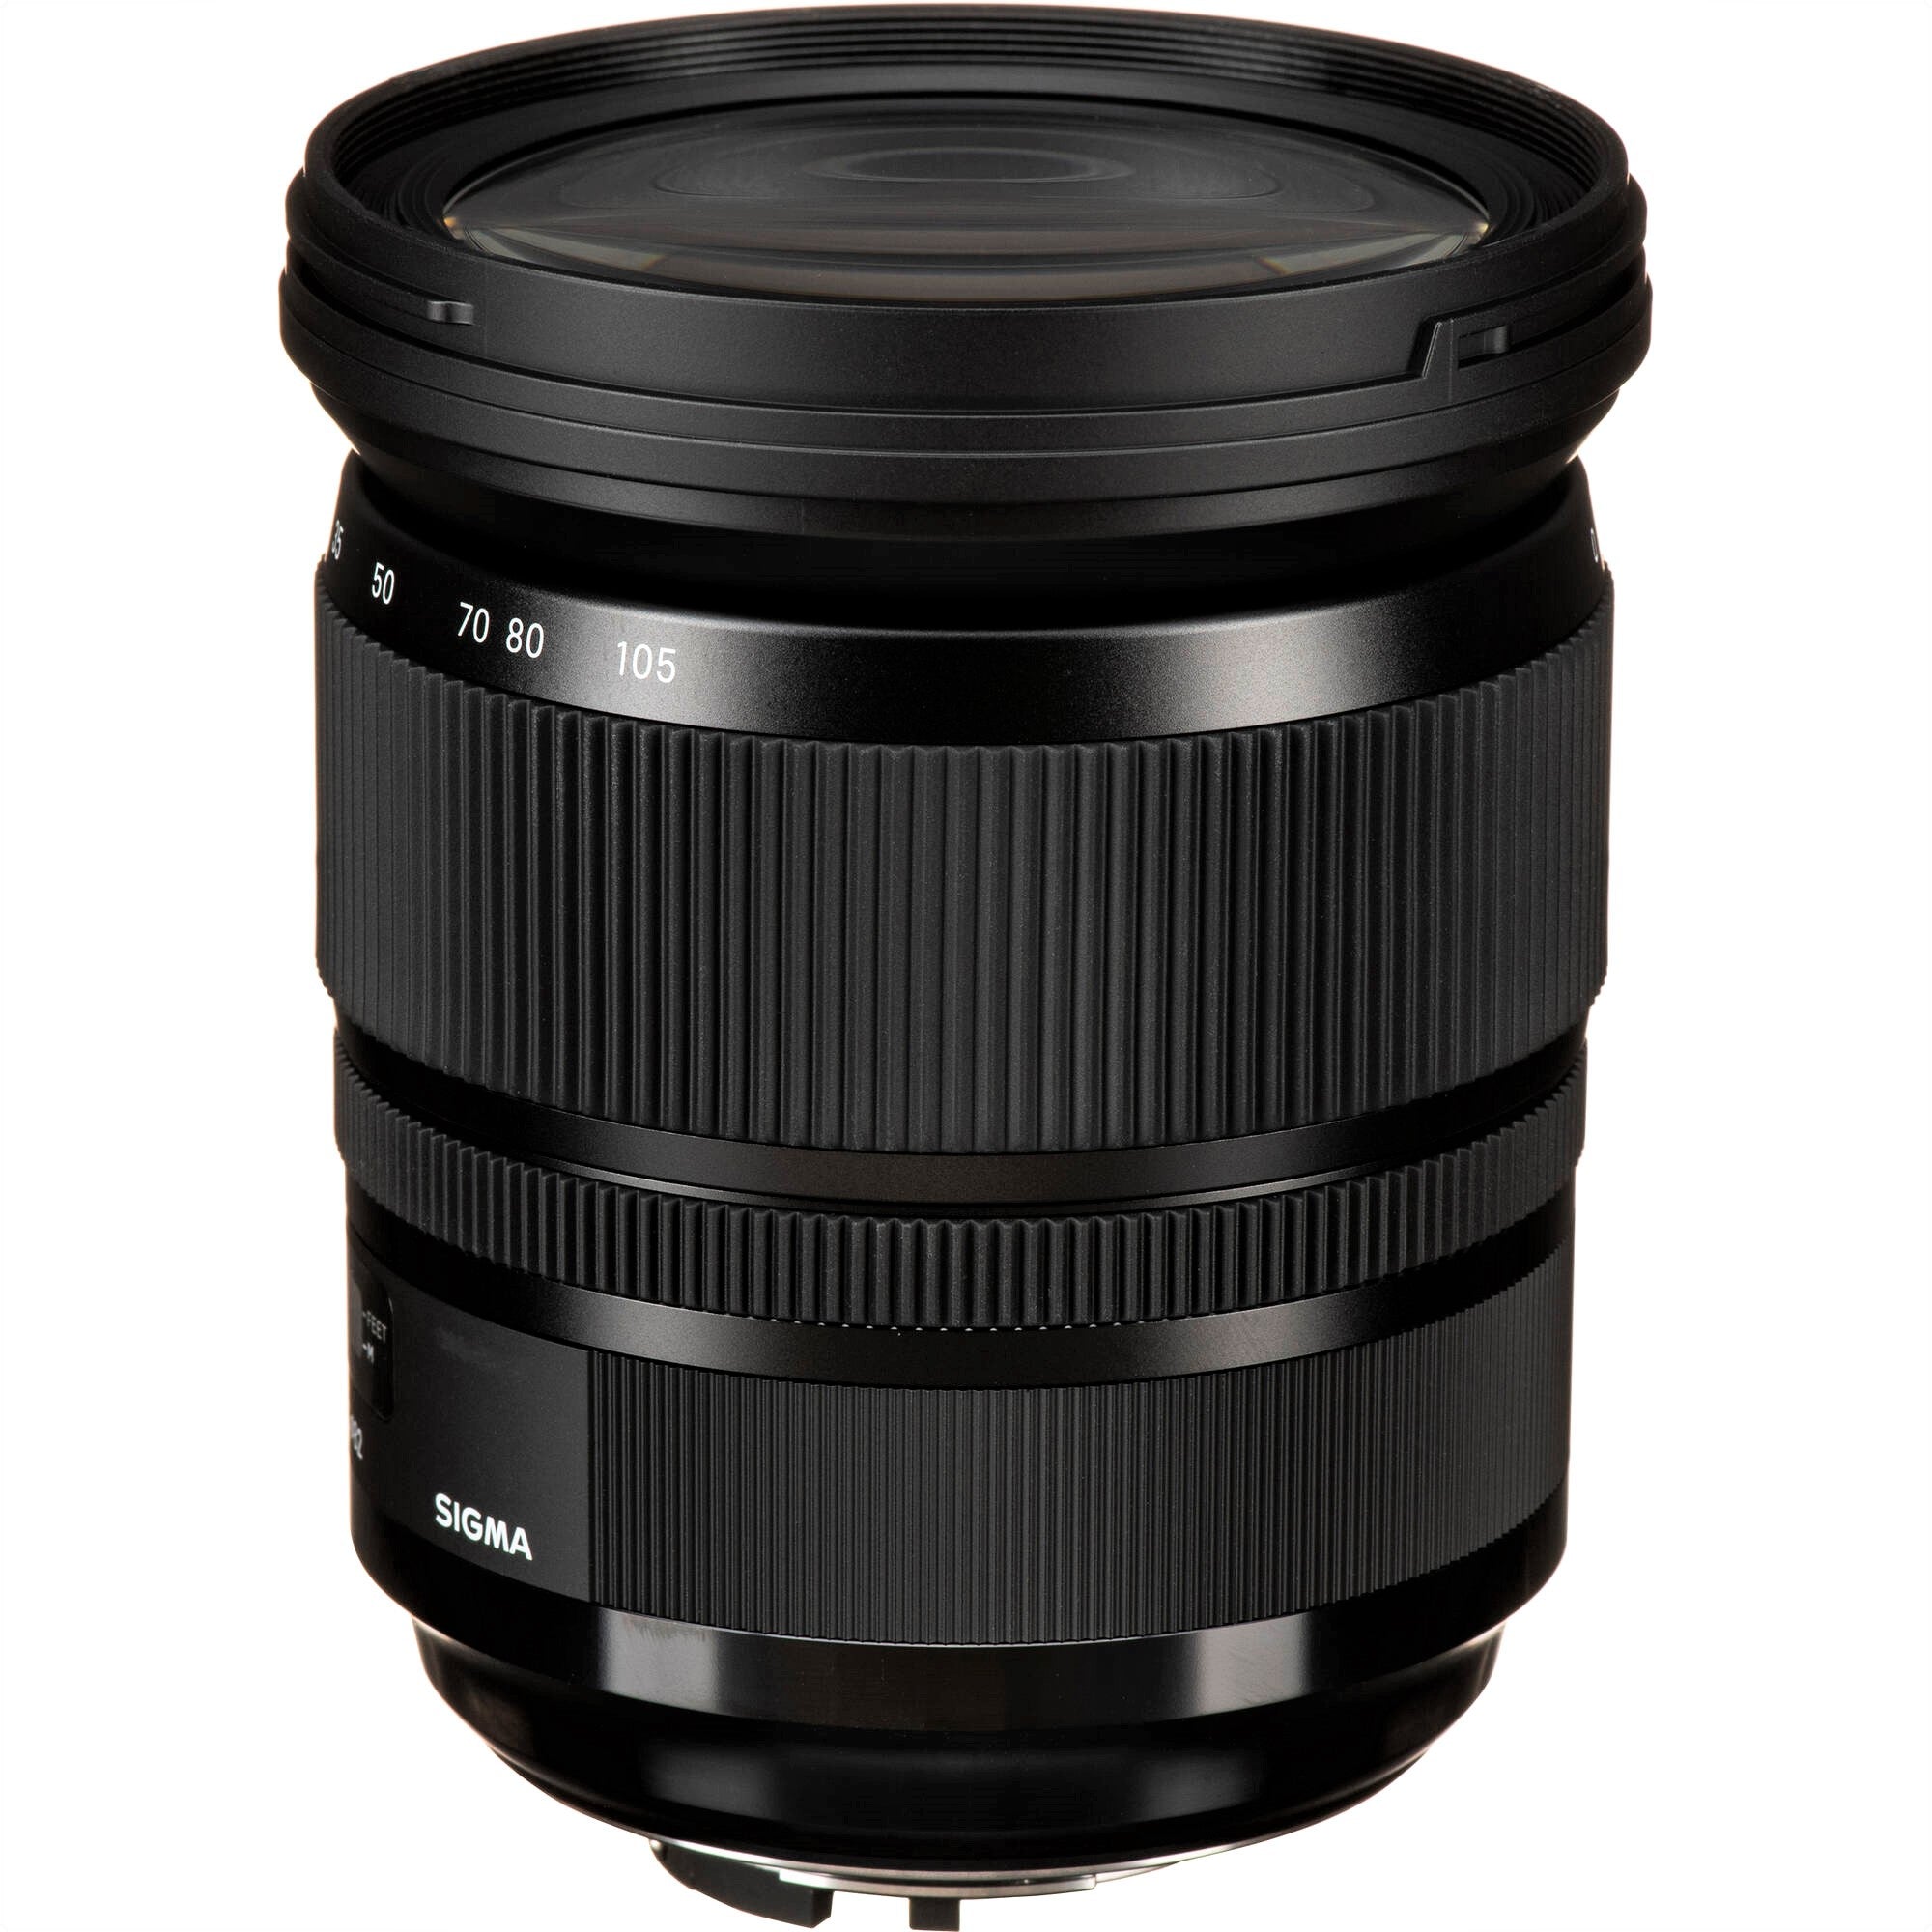 Sigma 24-105mm F4.0 DG OS HSM Art Lens (Nikon F)